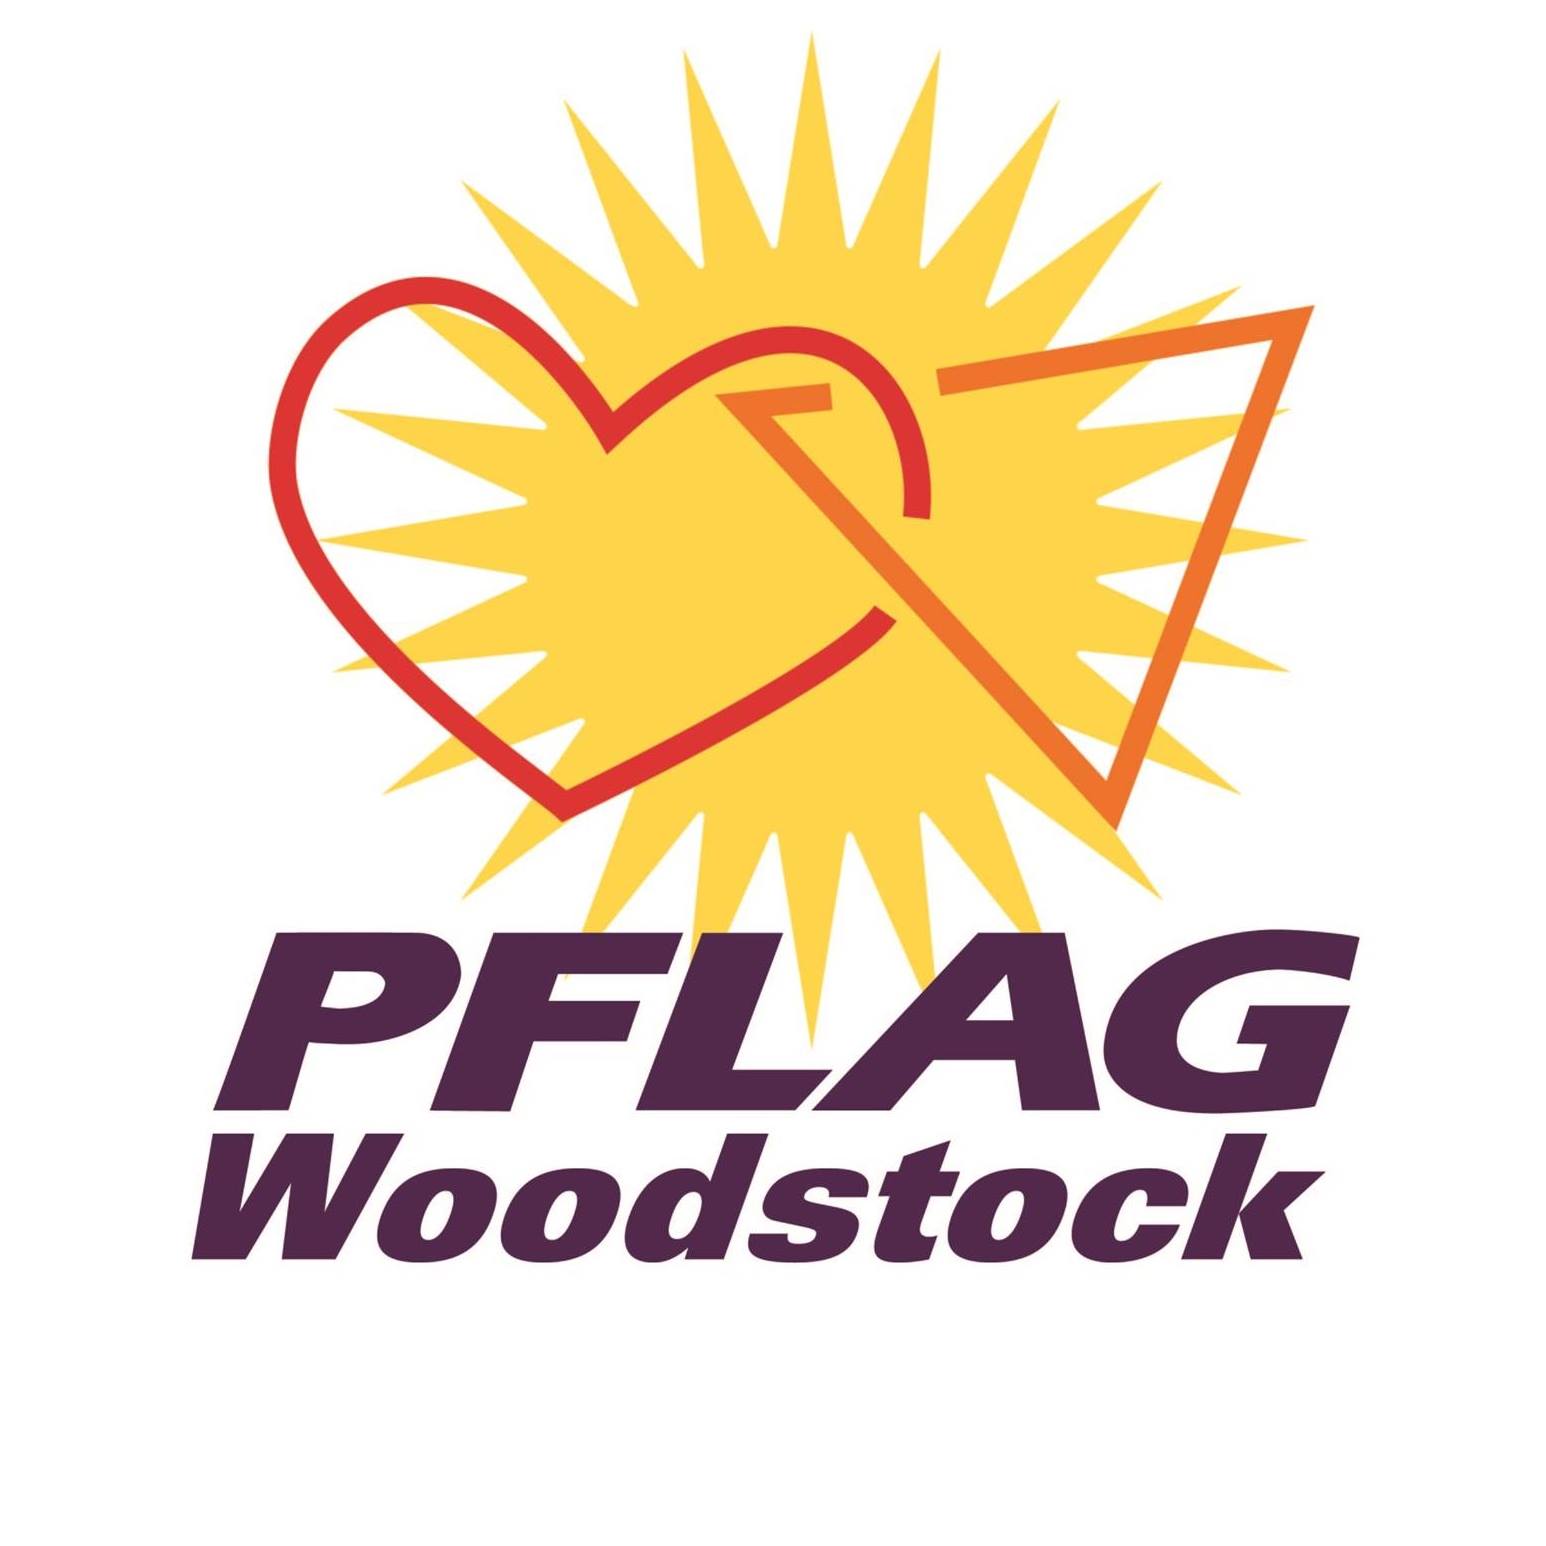 LGBTQ Organization in Georgia - PFLAG Woodstock